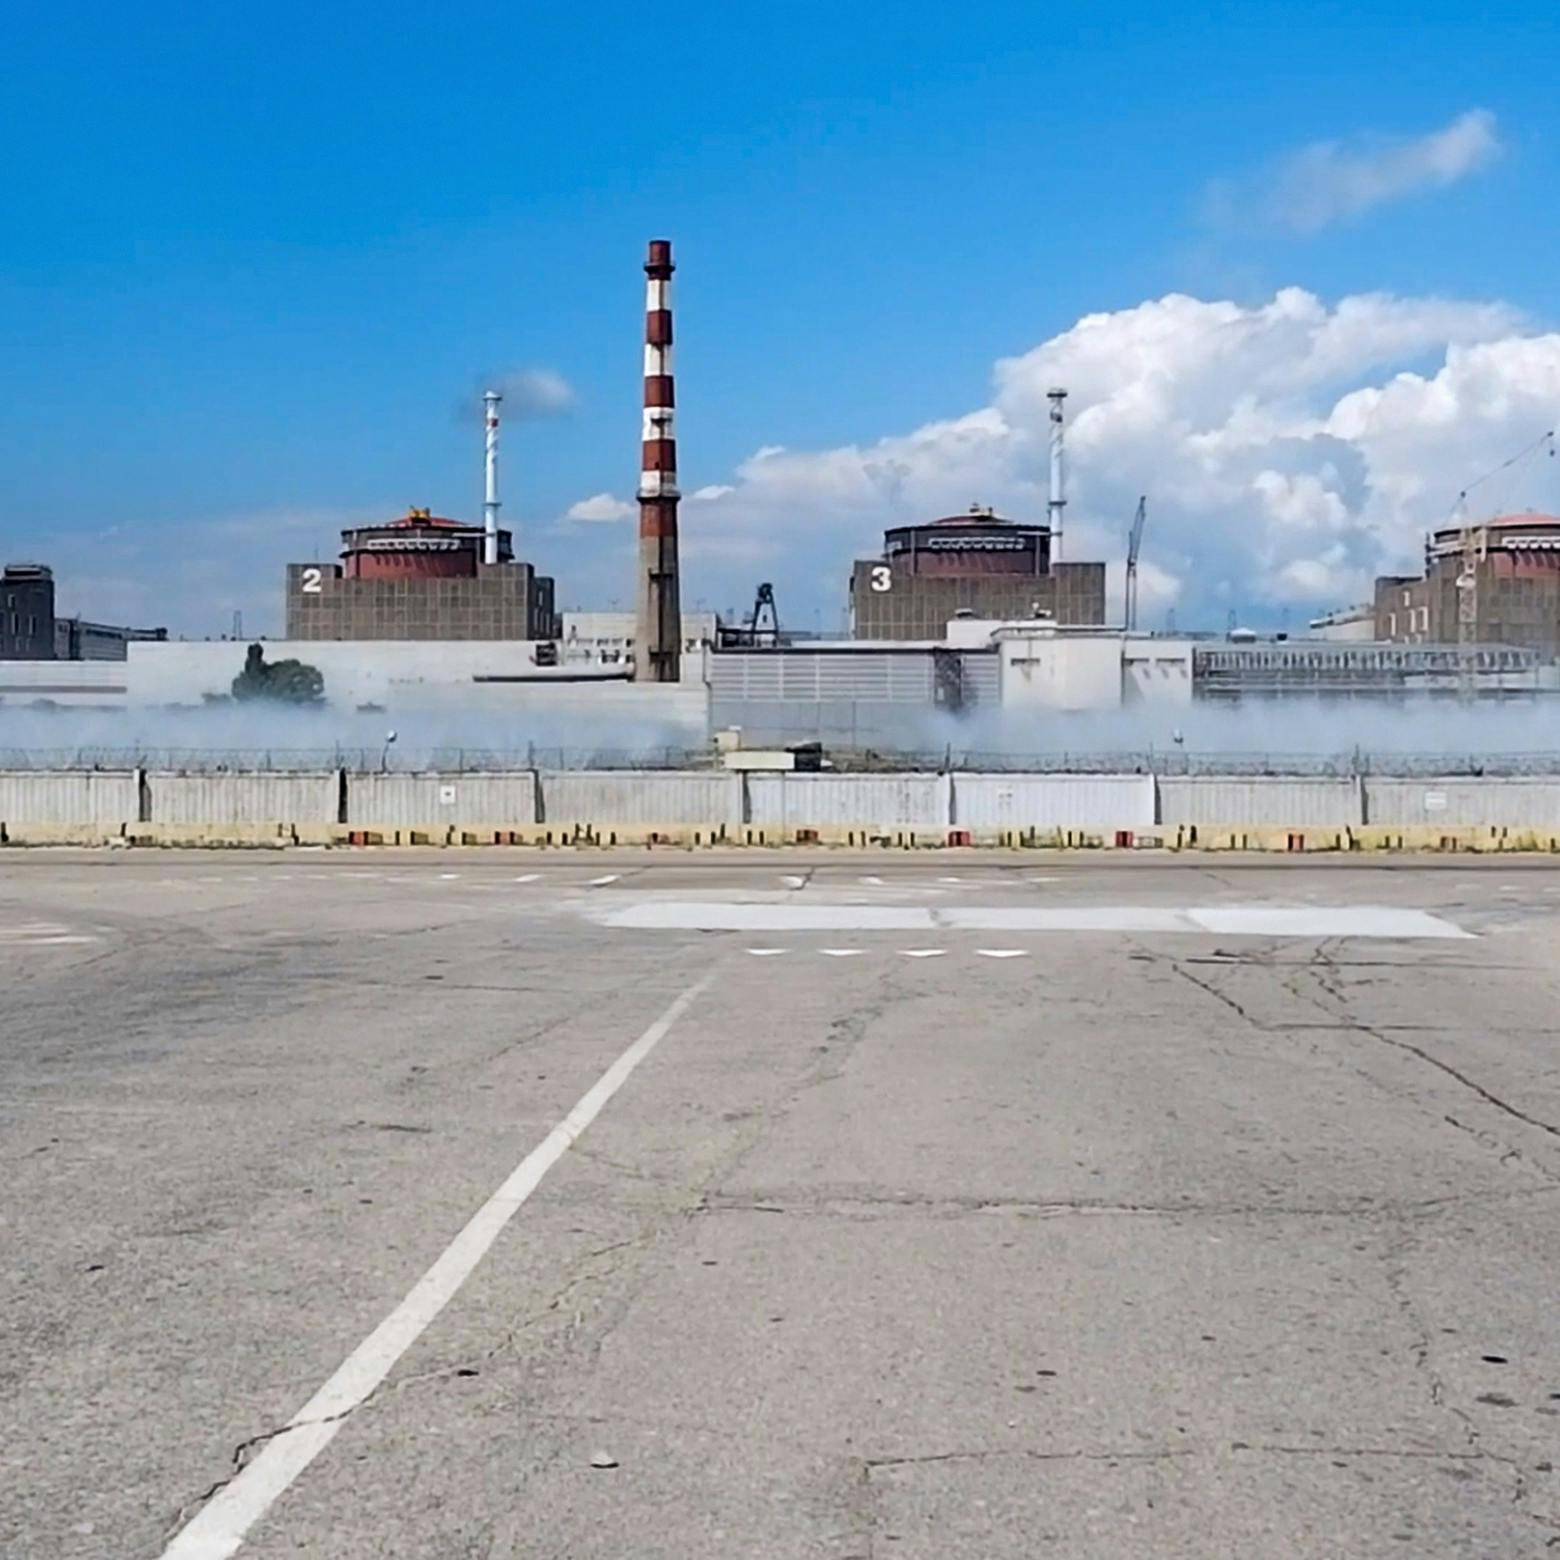 Steeds meer zorgen om bezette kerncentrale in Oekraïne: 'Kernramp reëel'